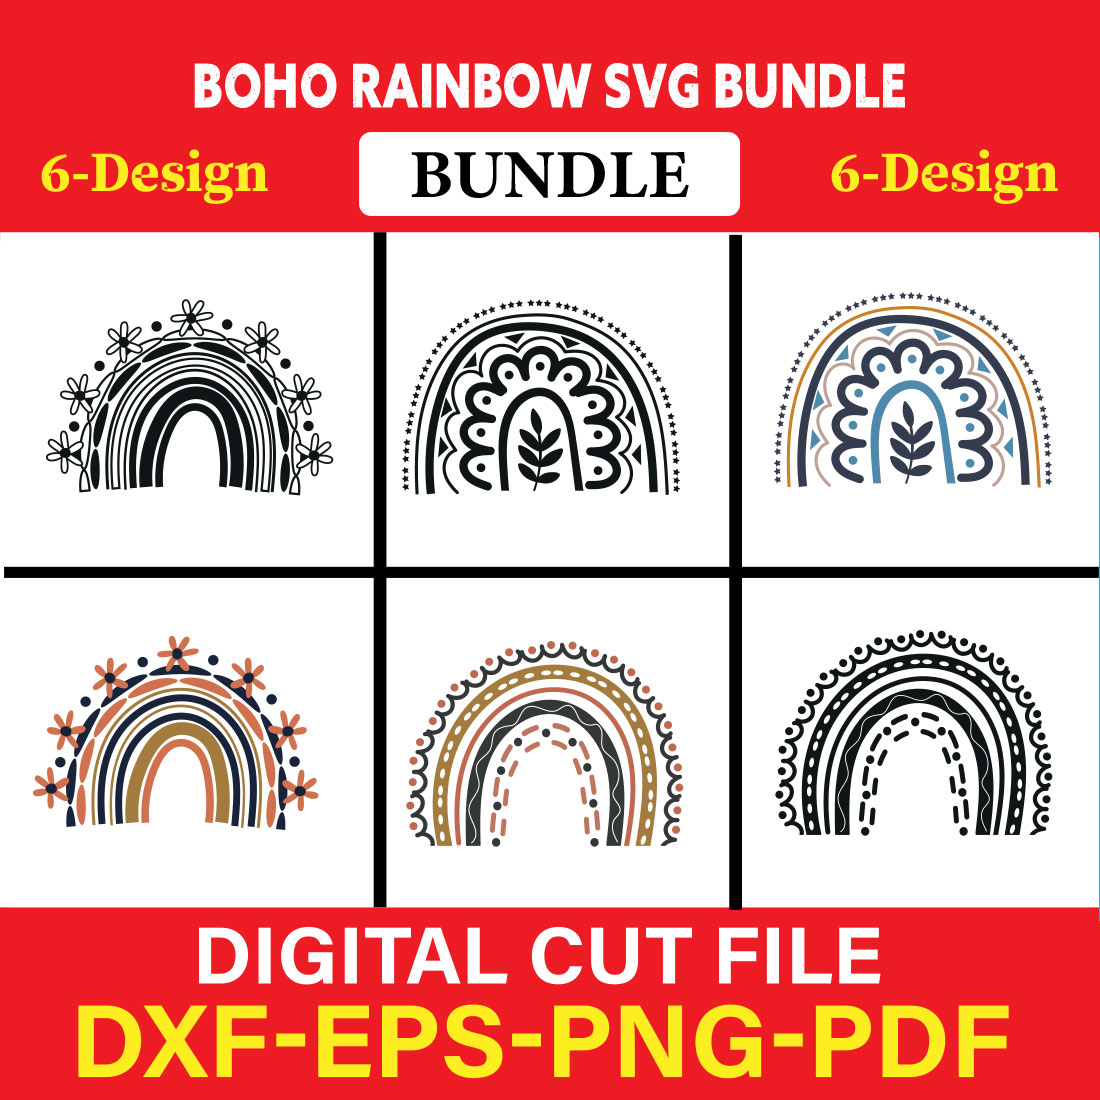 Boho Rainbow T-shirt Design Bundle Vol-3 cover image.